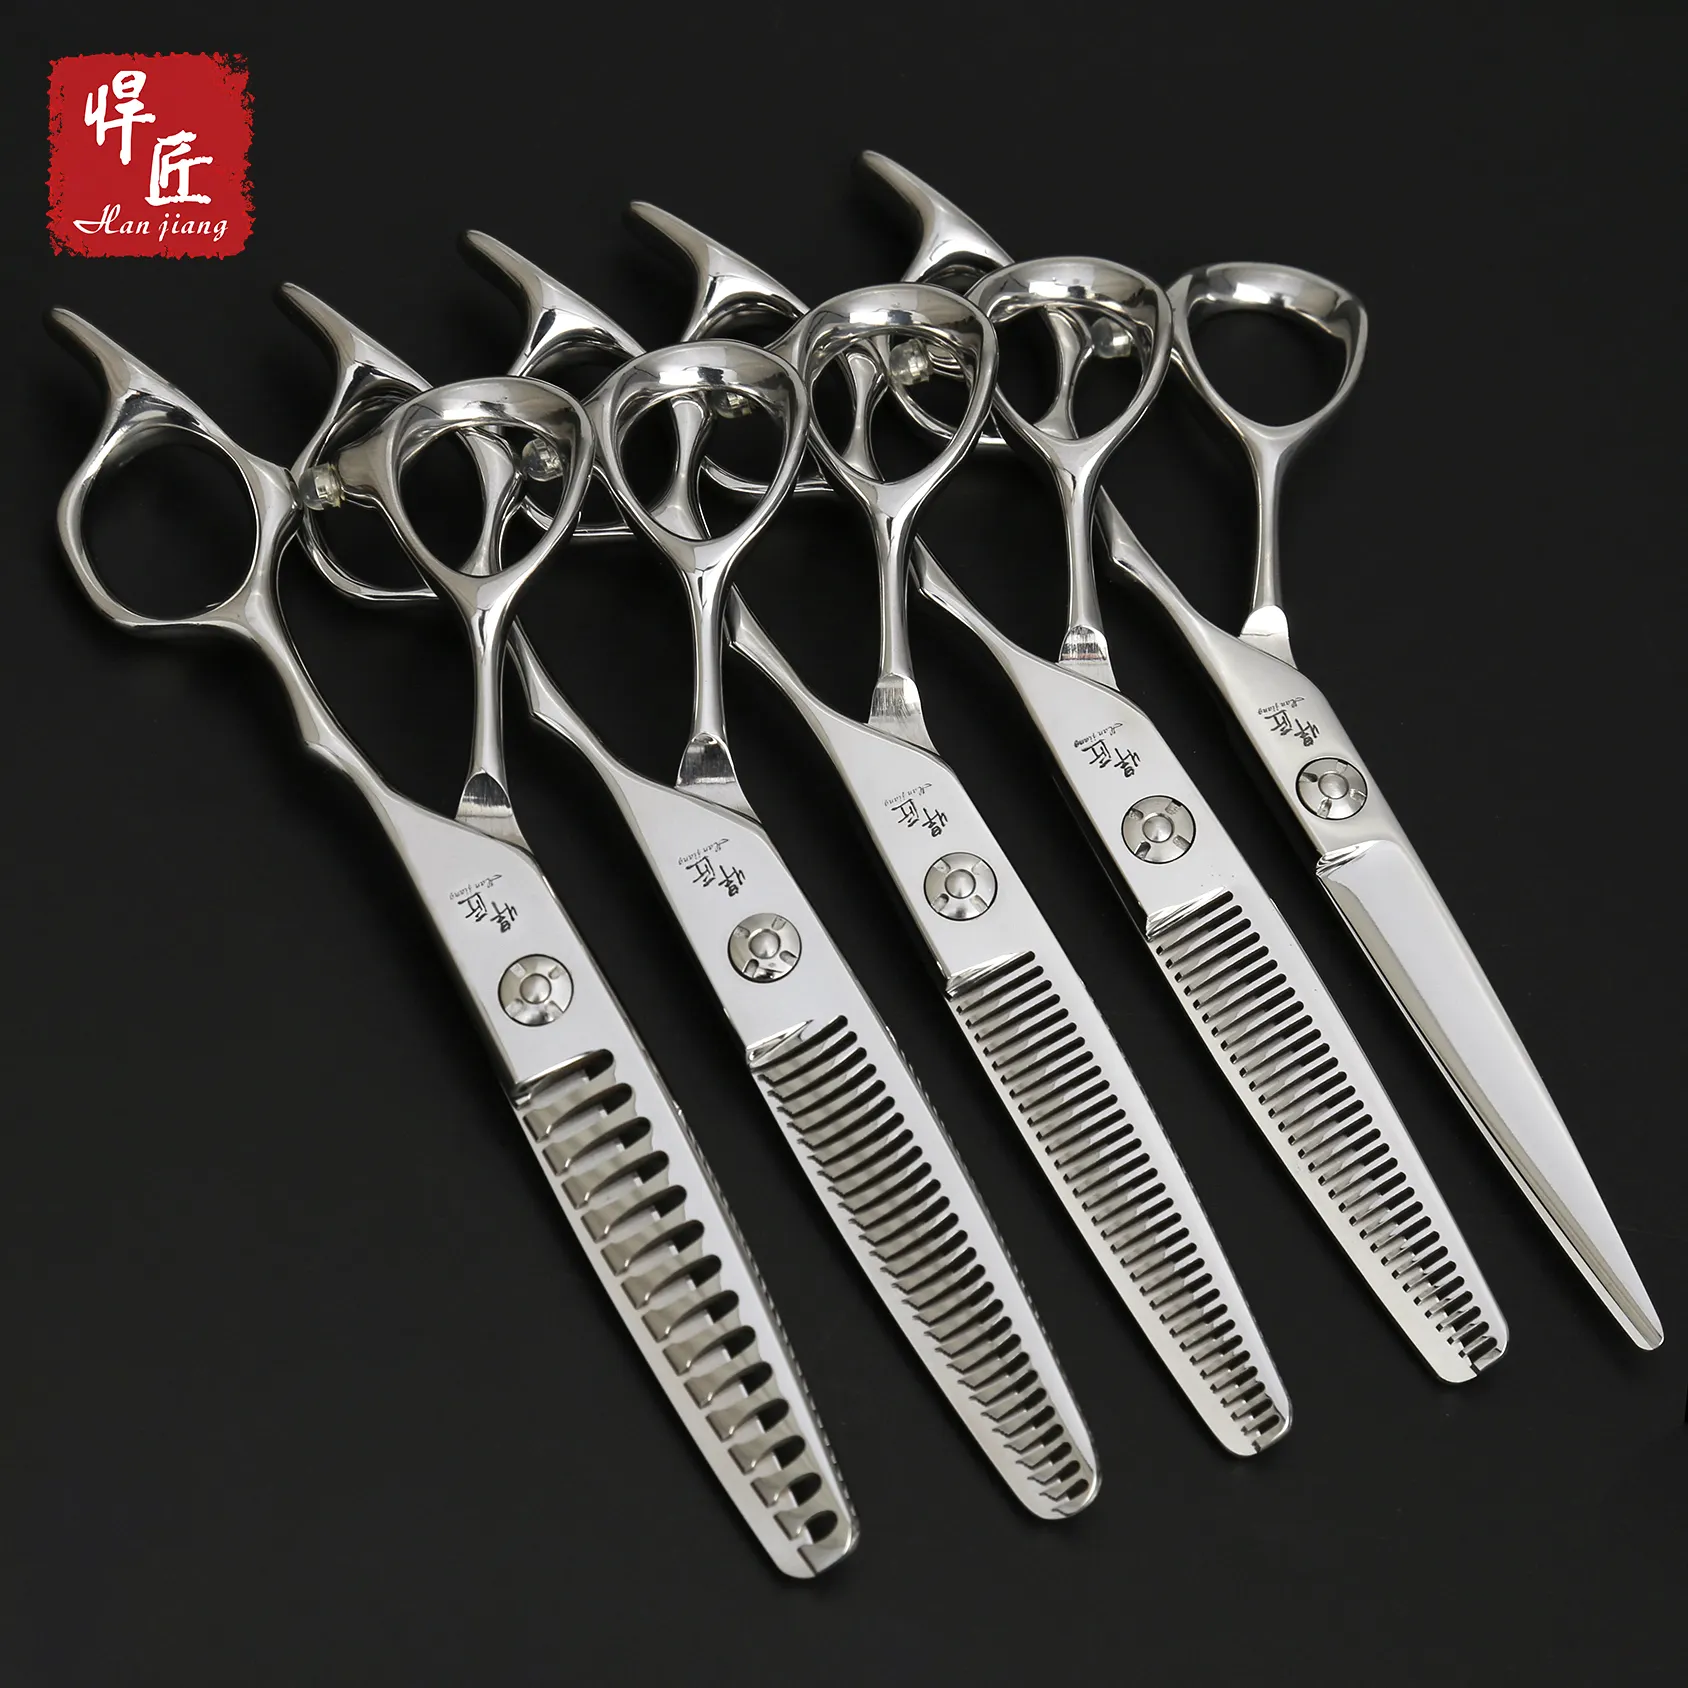 Japanese 440C Steel Professional Hair Cutting Scissors Thinning Kit Salon Barber Shears Hairdresser Scissors